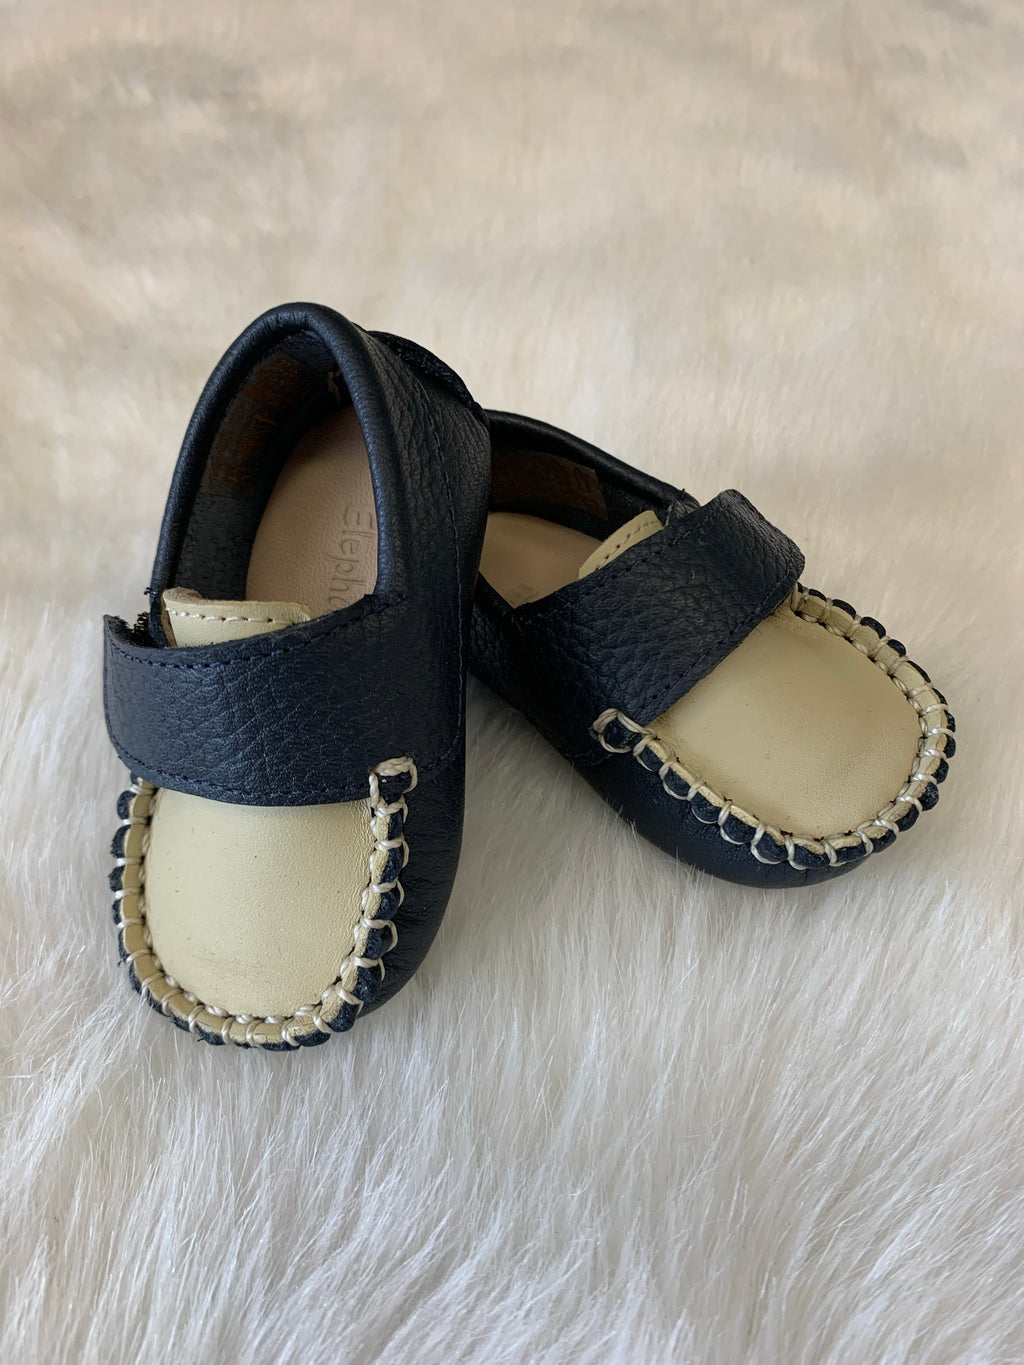 Elephantito Oliver Blue and Tan Baby Shoe